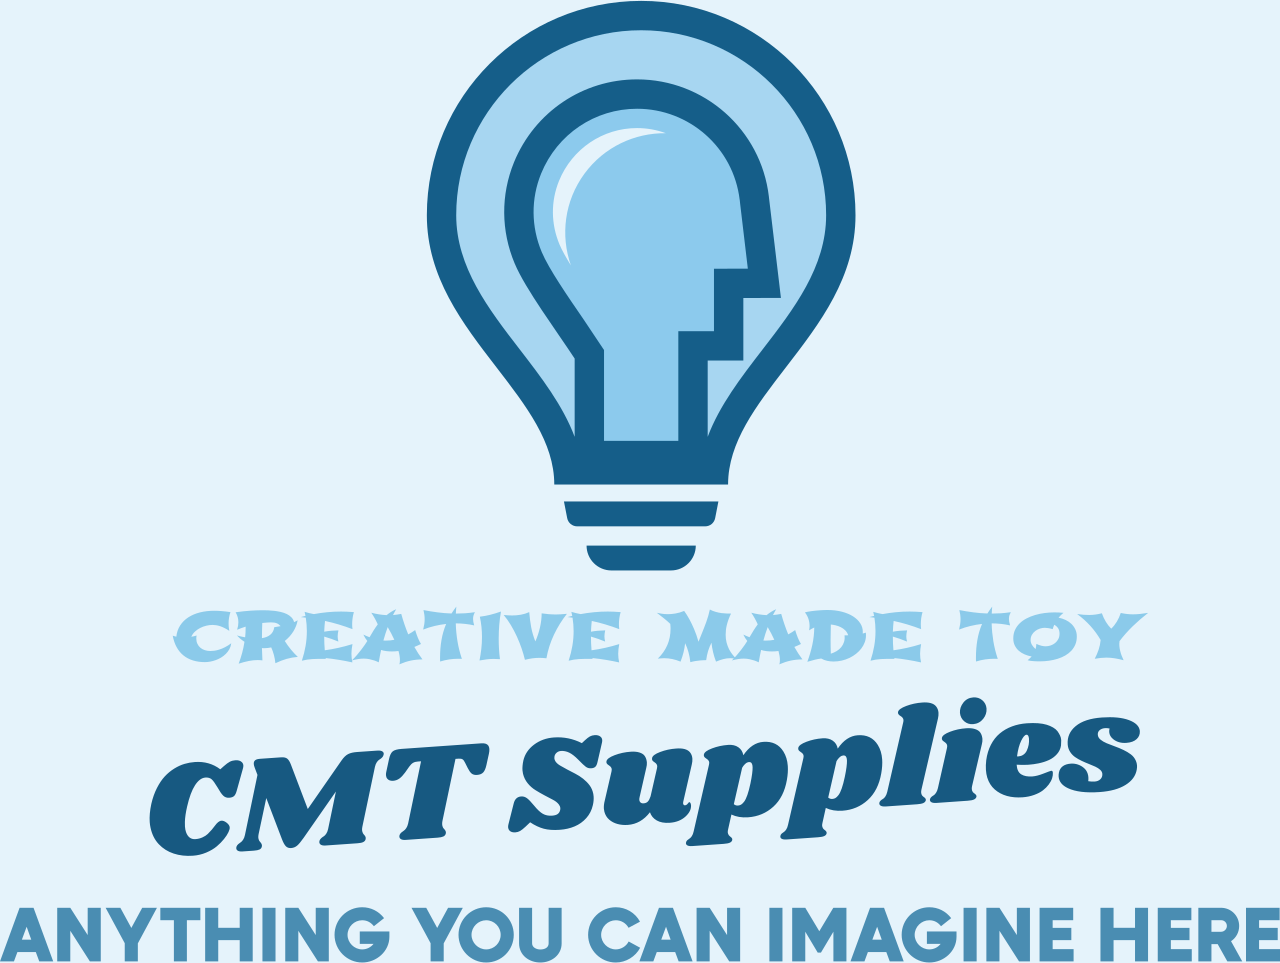 Creative Made Toy - CMT Supplies's logo